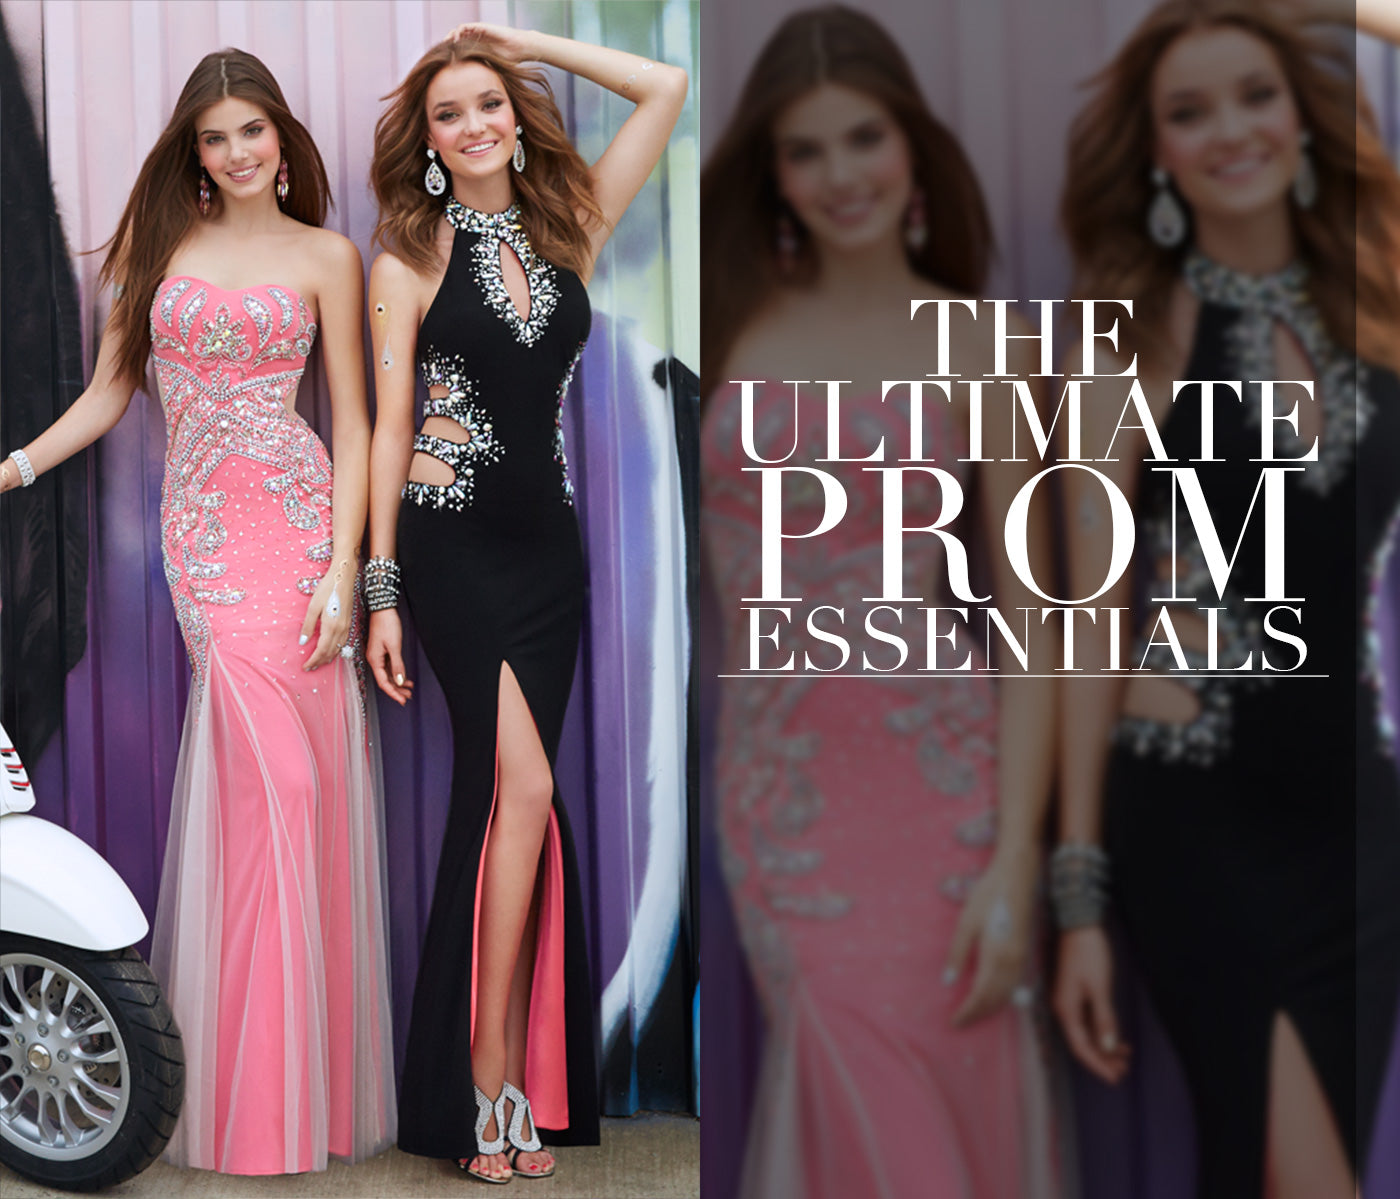 Prep for Prom Season: The Ultimate Prom Essentials